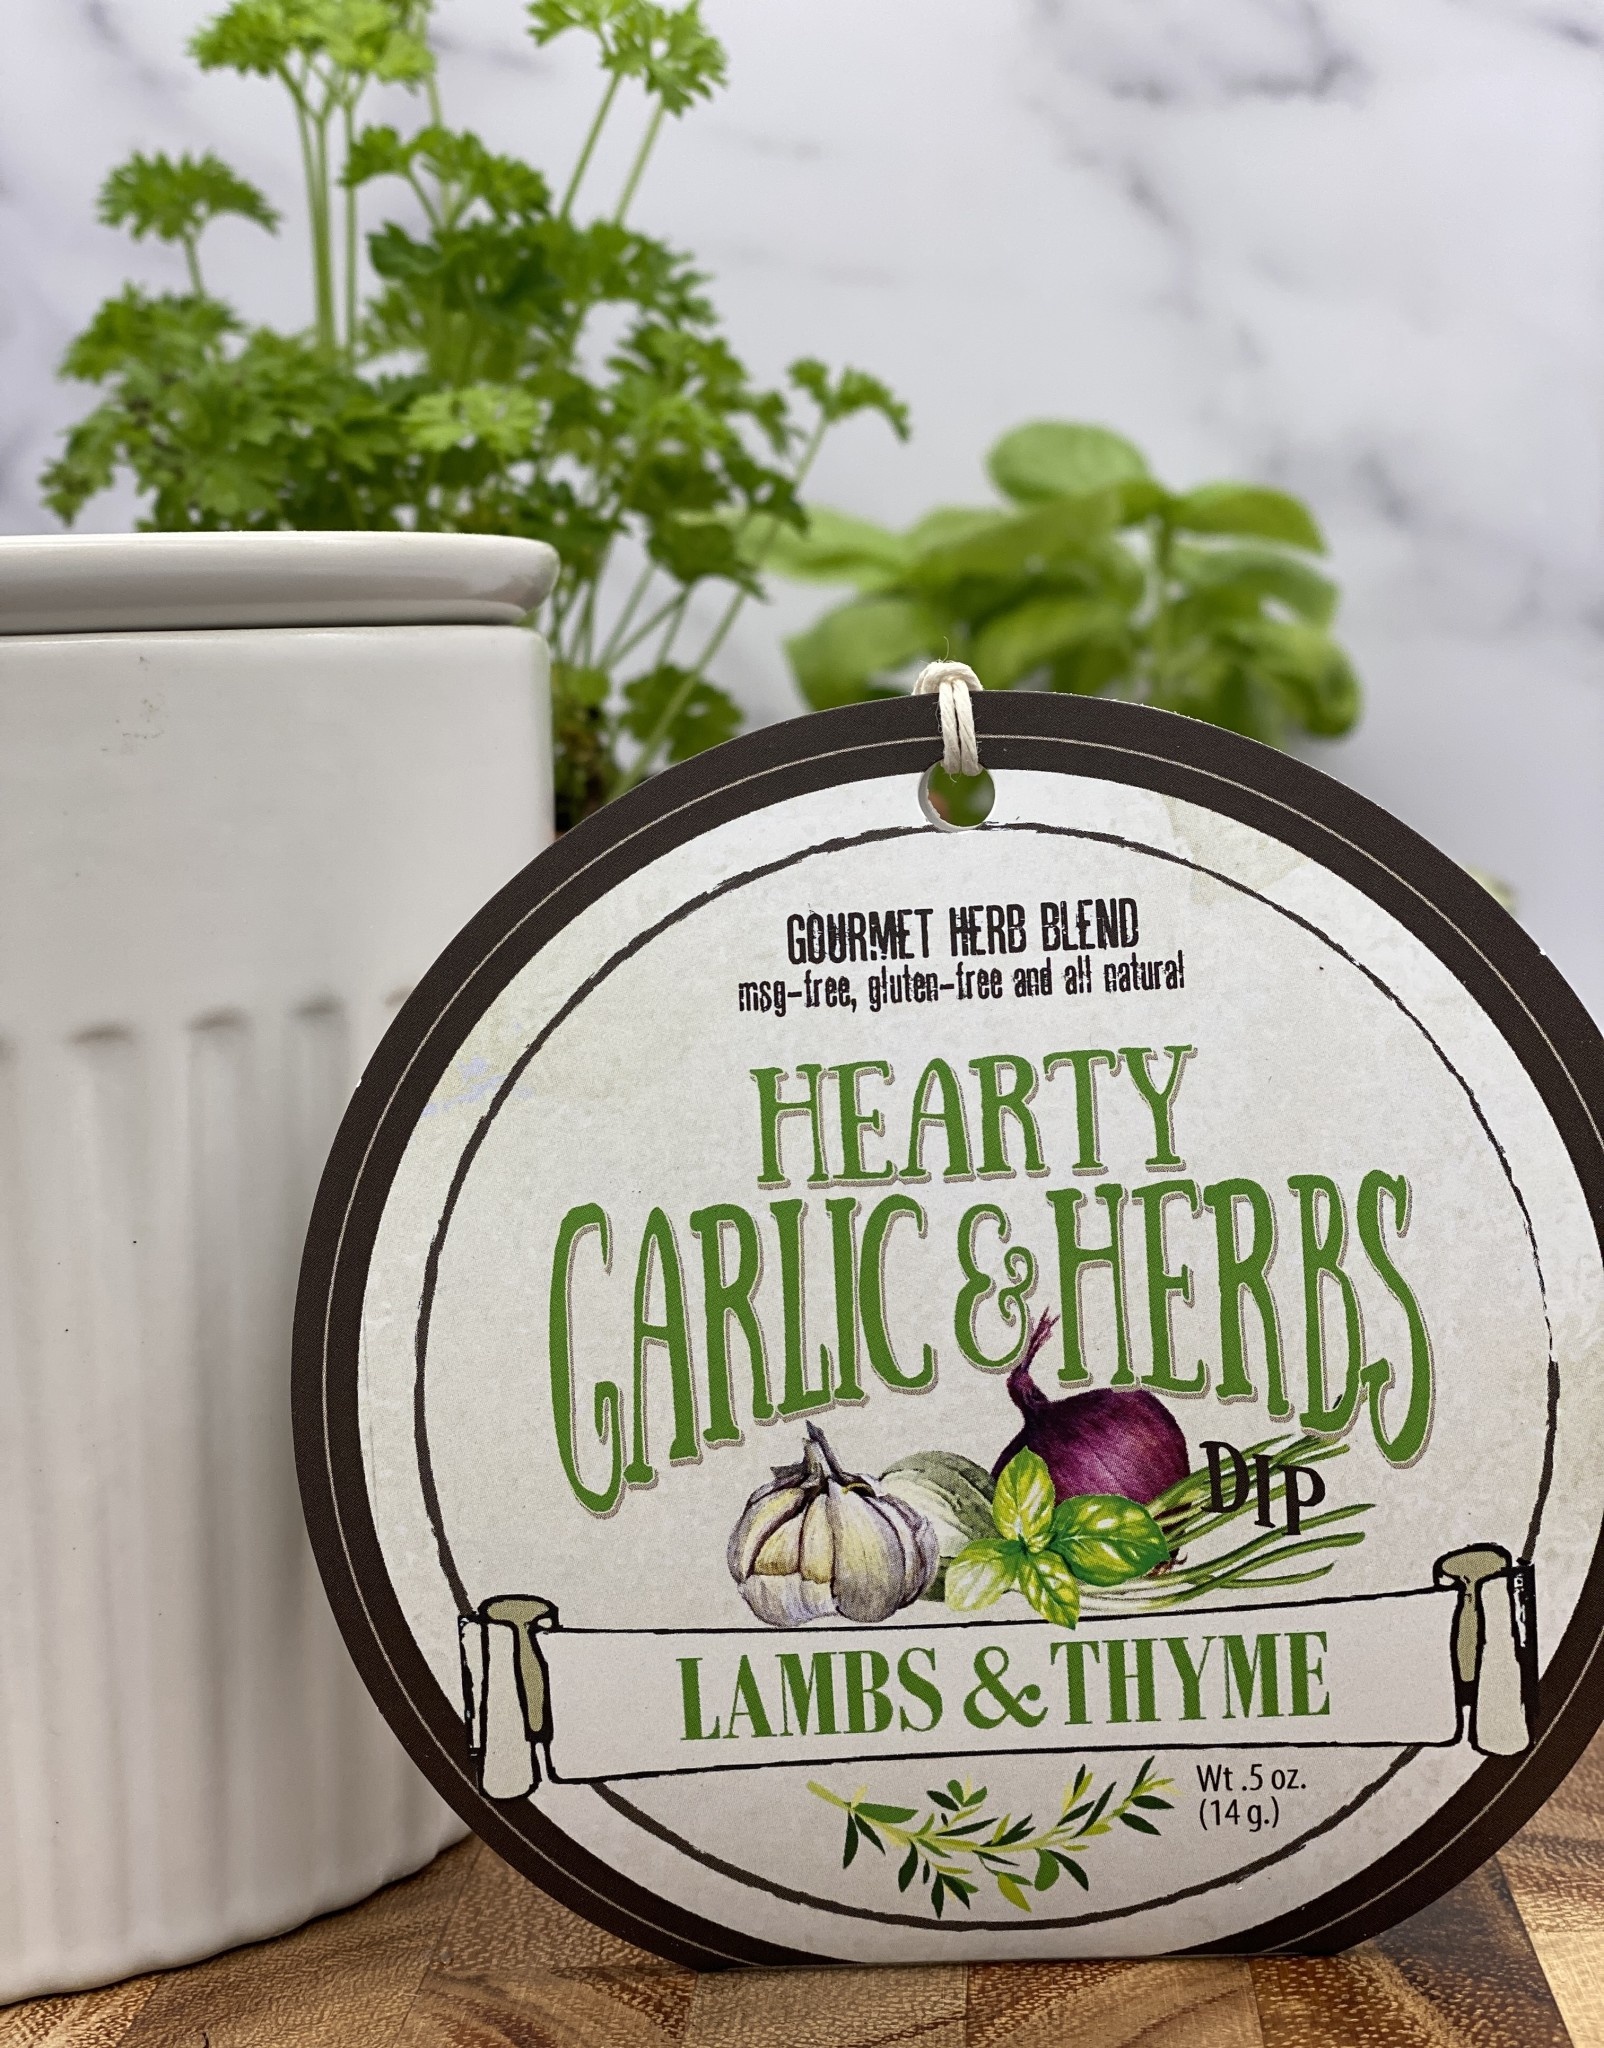 Lambs & Thyme Herb Dips Hearty Garlic & Herbs